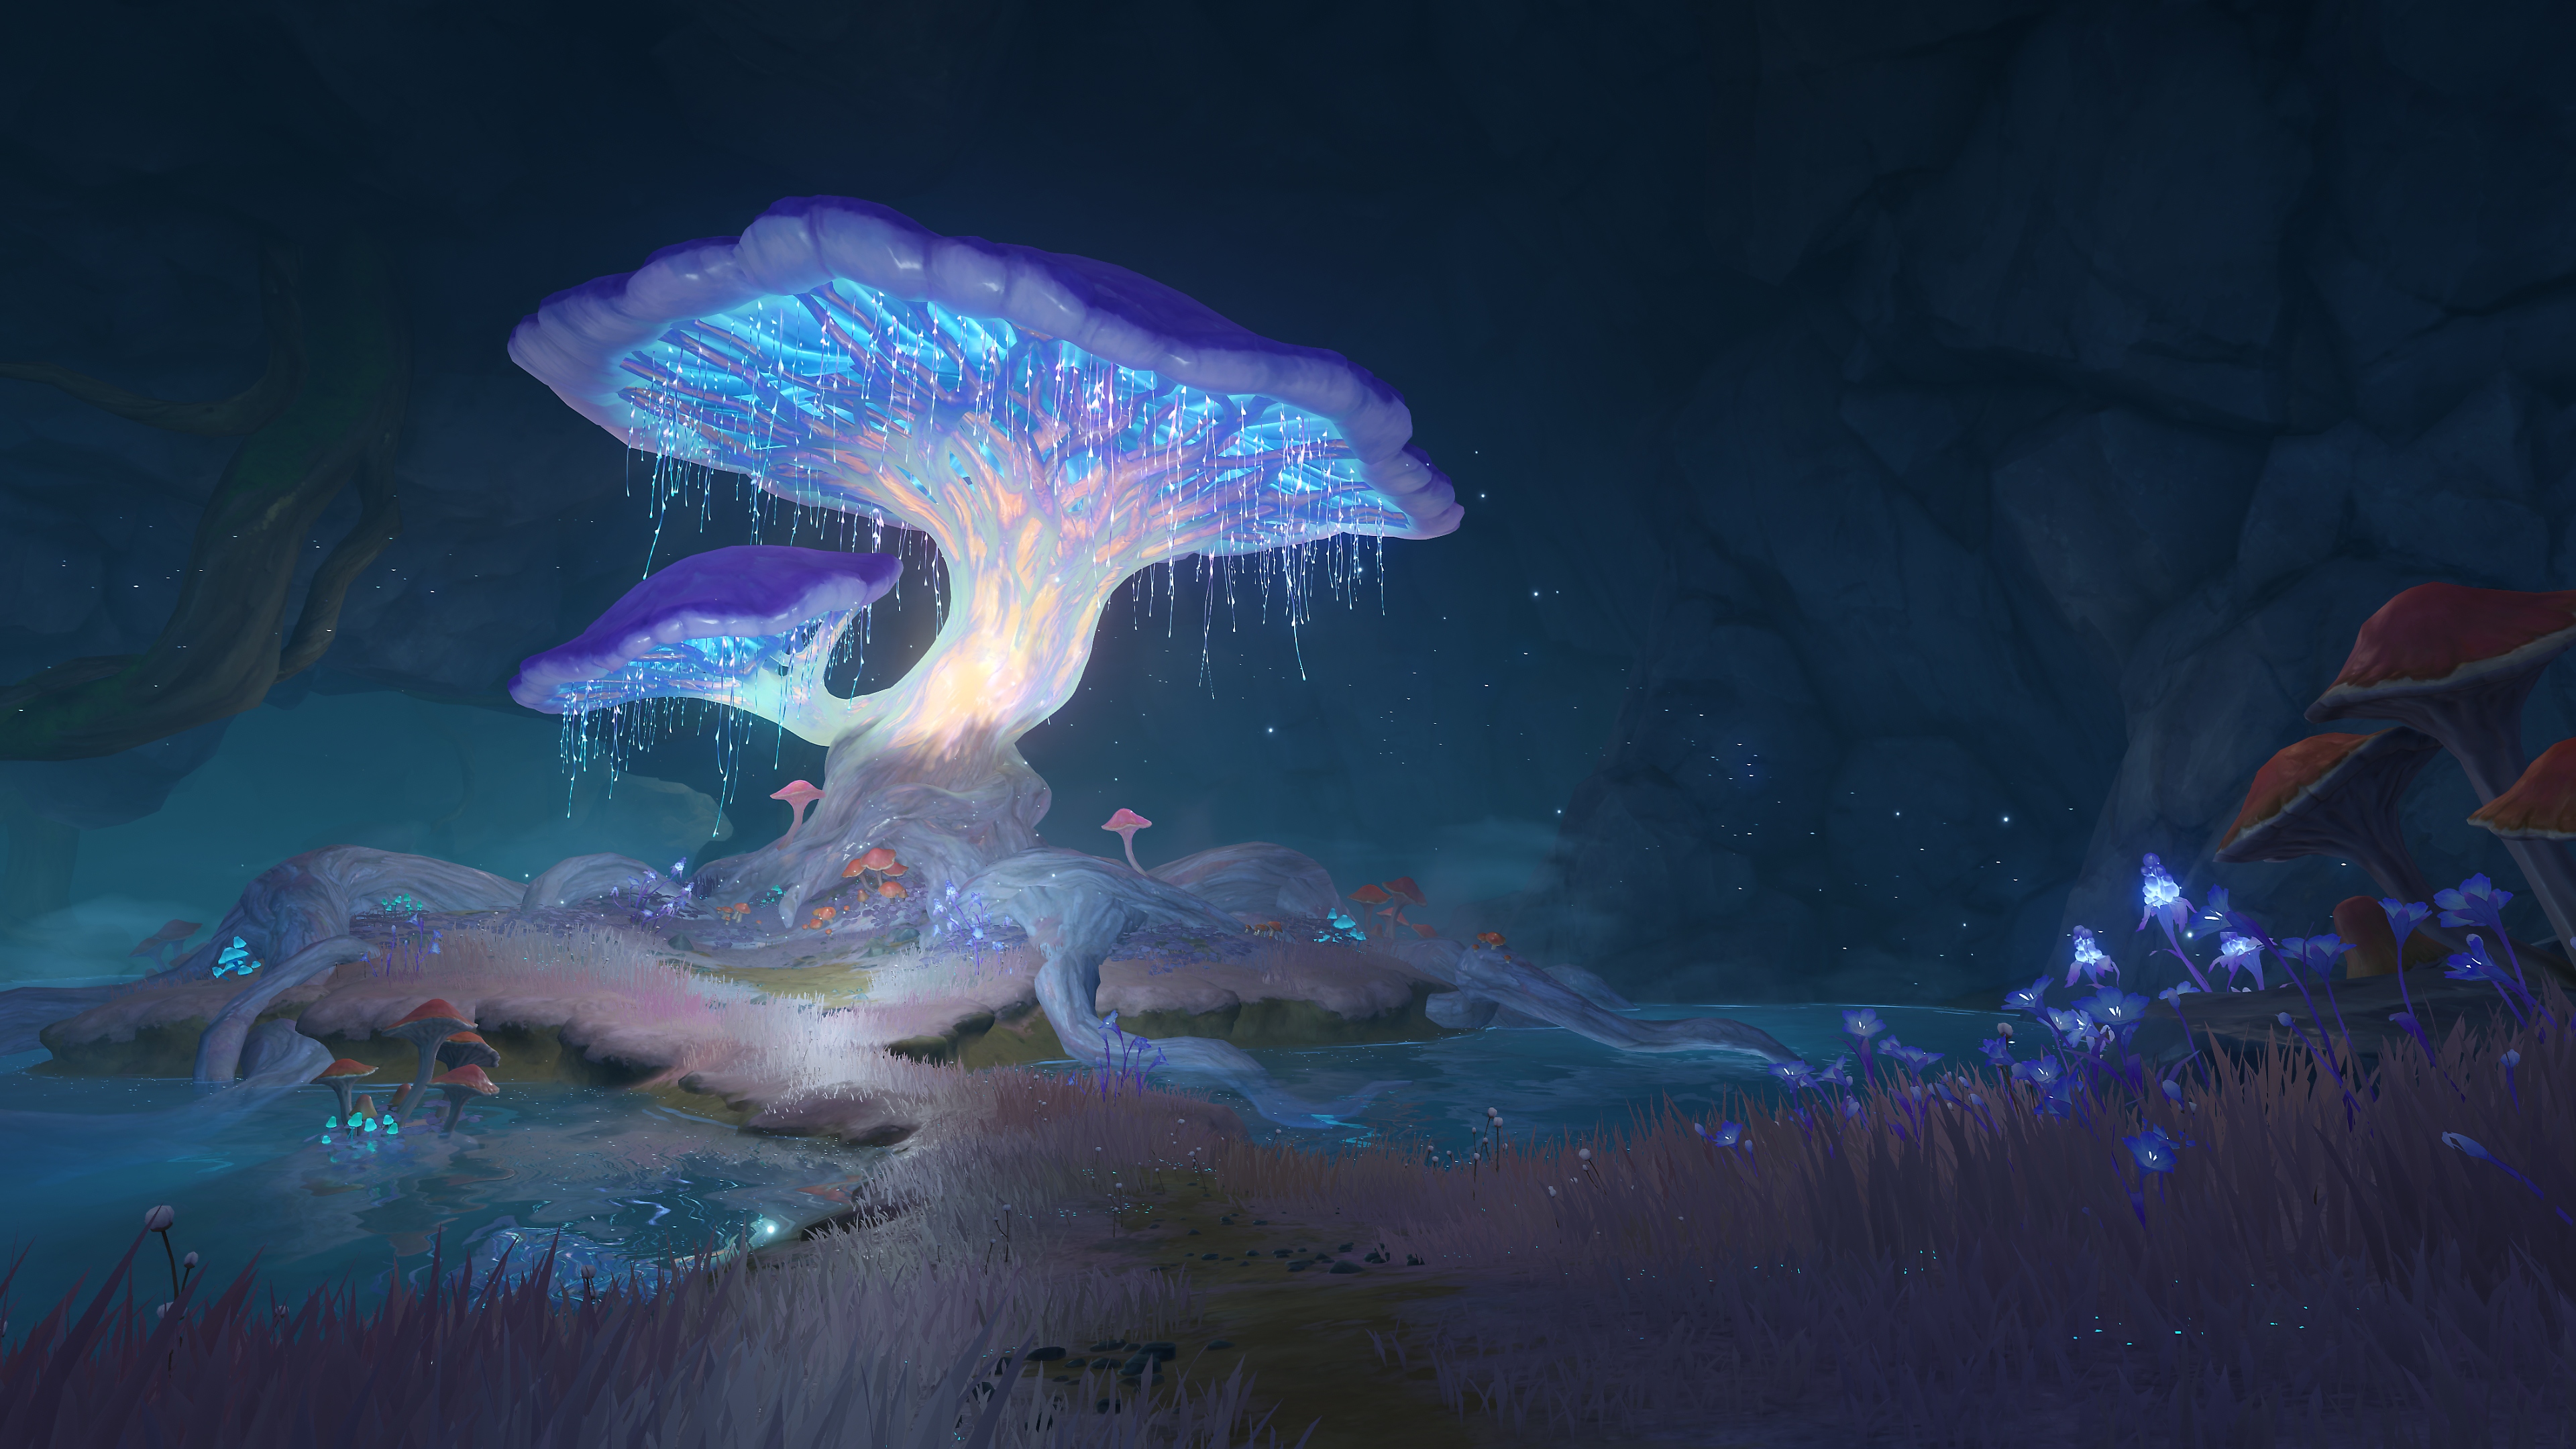 Genshin Impact: 2.6 Update screenshot featuring a glowing mushroom in a cave-like or underground setting